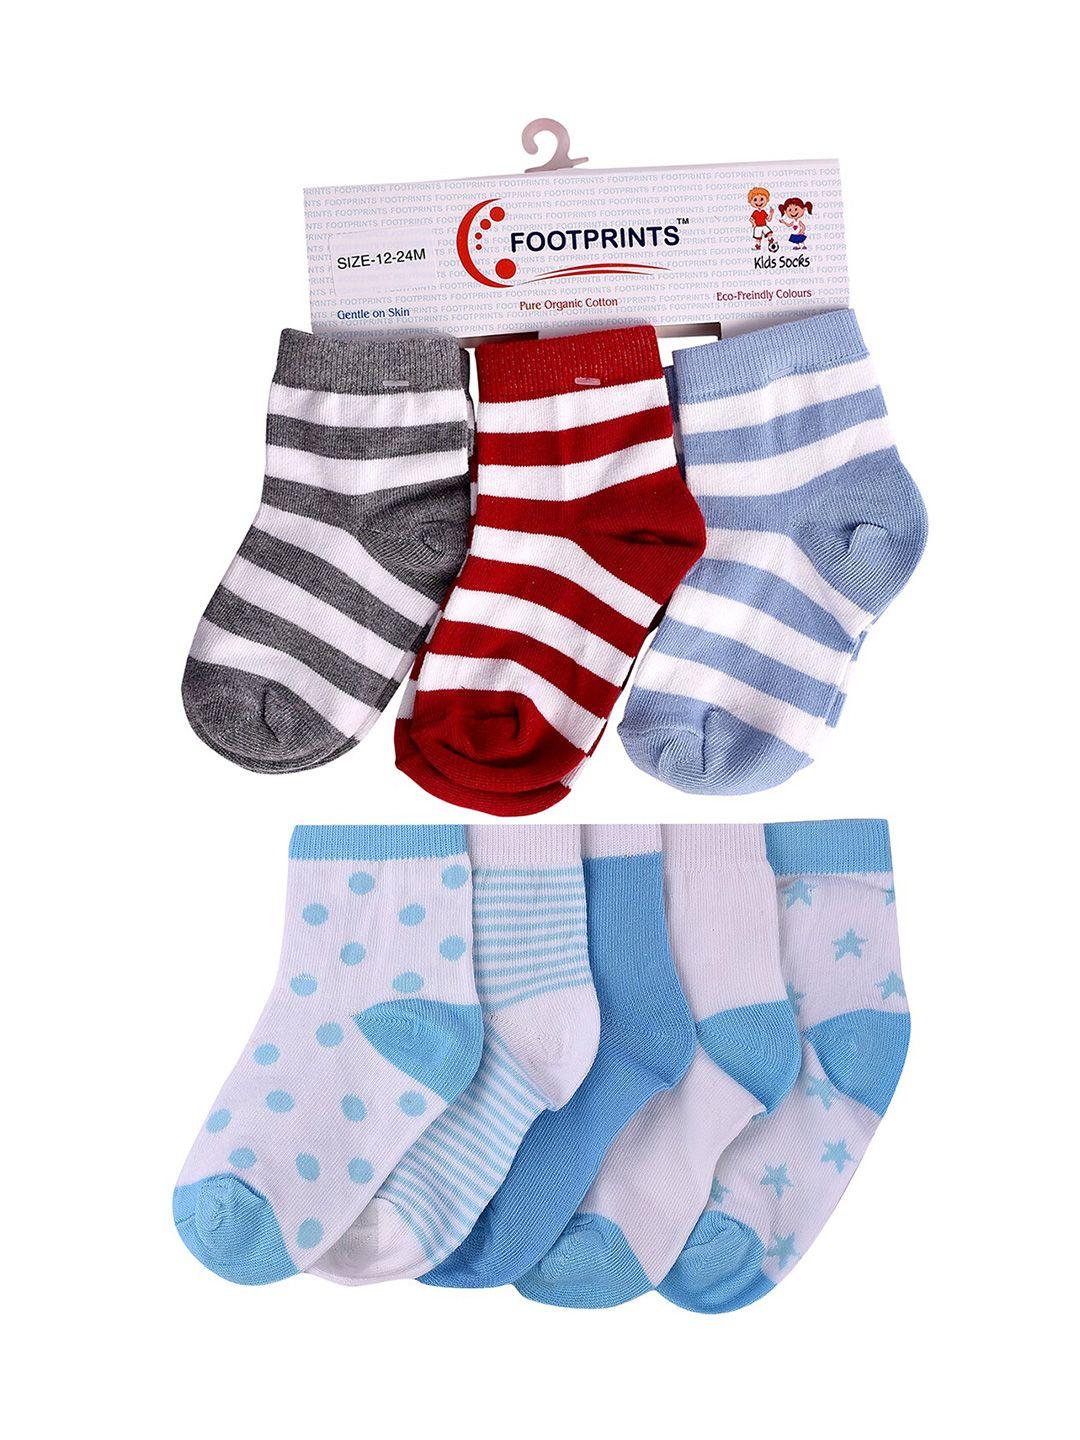 footprints kids pack of 8 white & blue patterned organic cotton socks